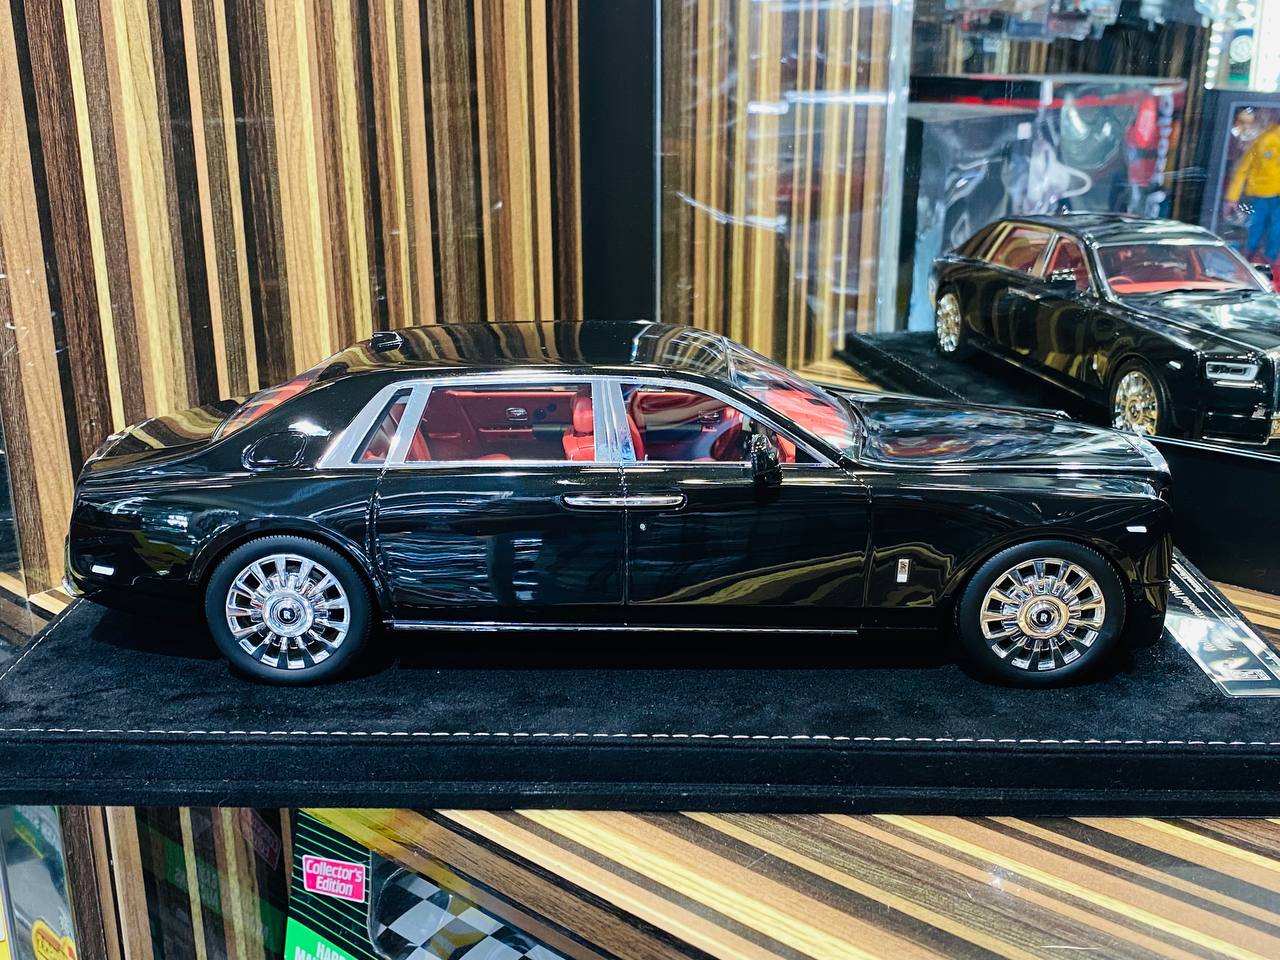 HH Rolls Royce Phantom Extended Wheelbase Resin Model - Diamond Black | Limited Edition